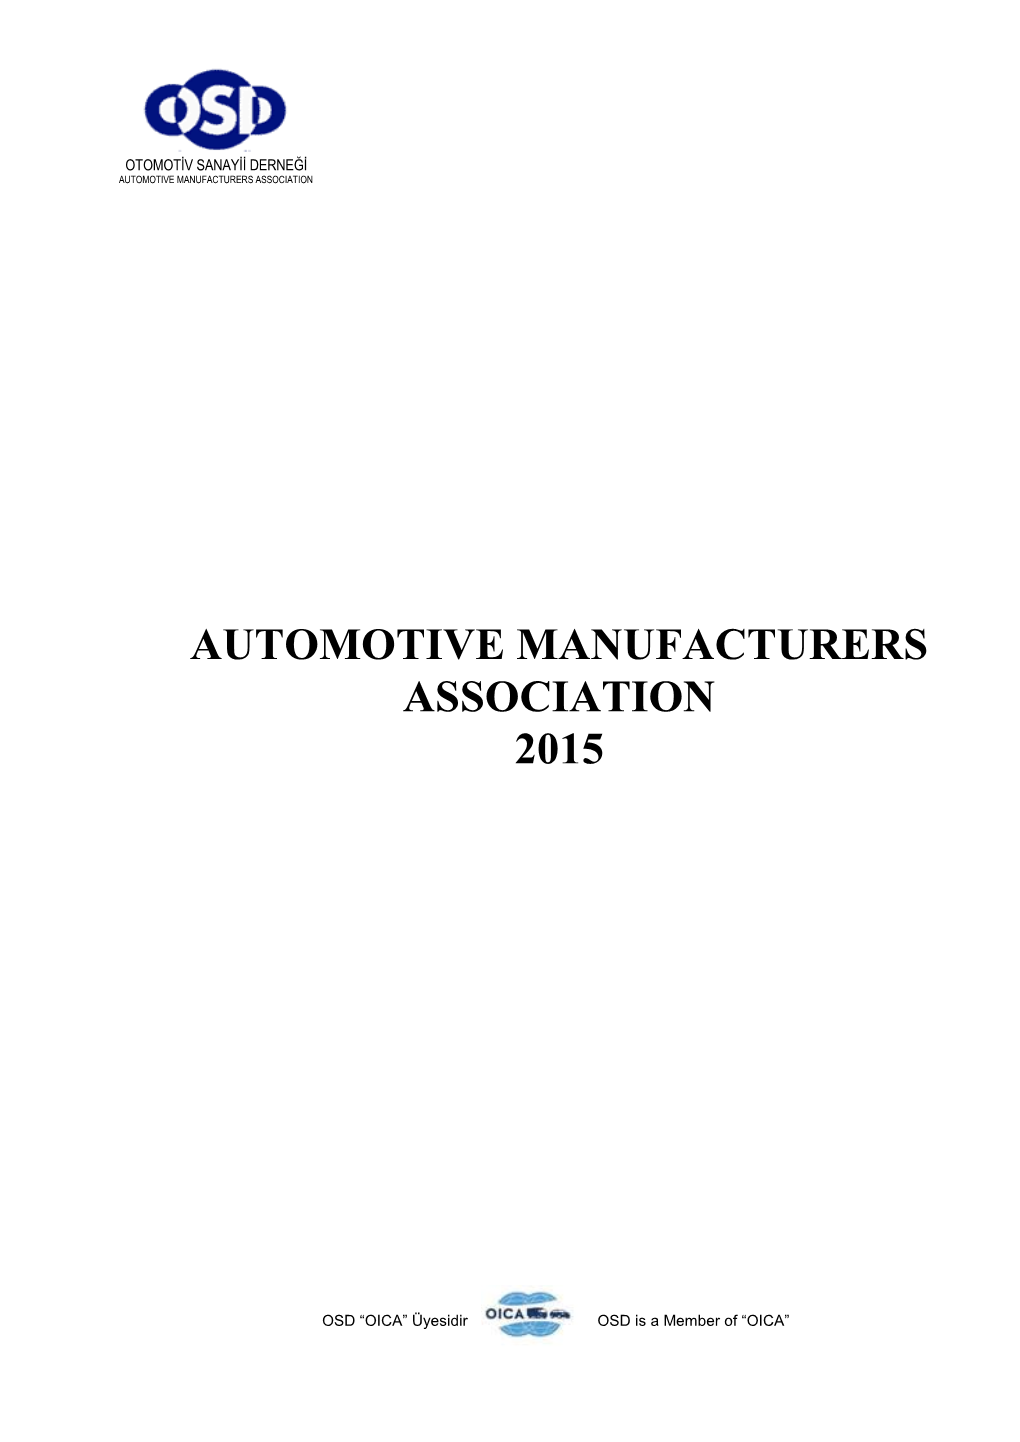 Association of Automotive Manufacturers